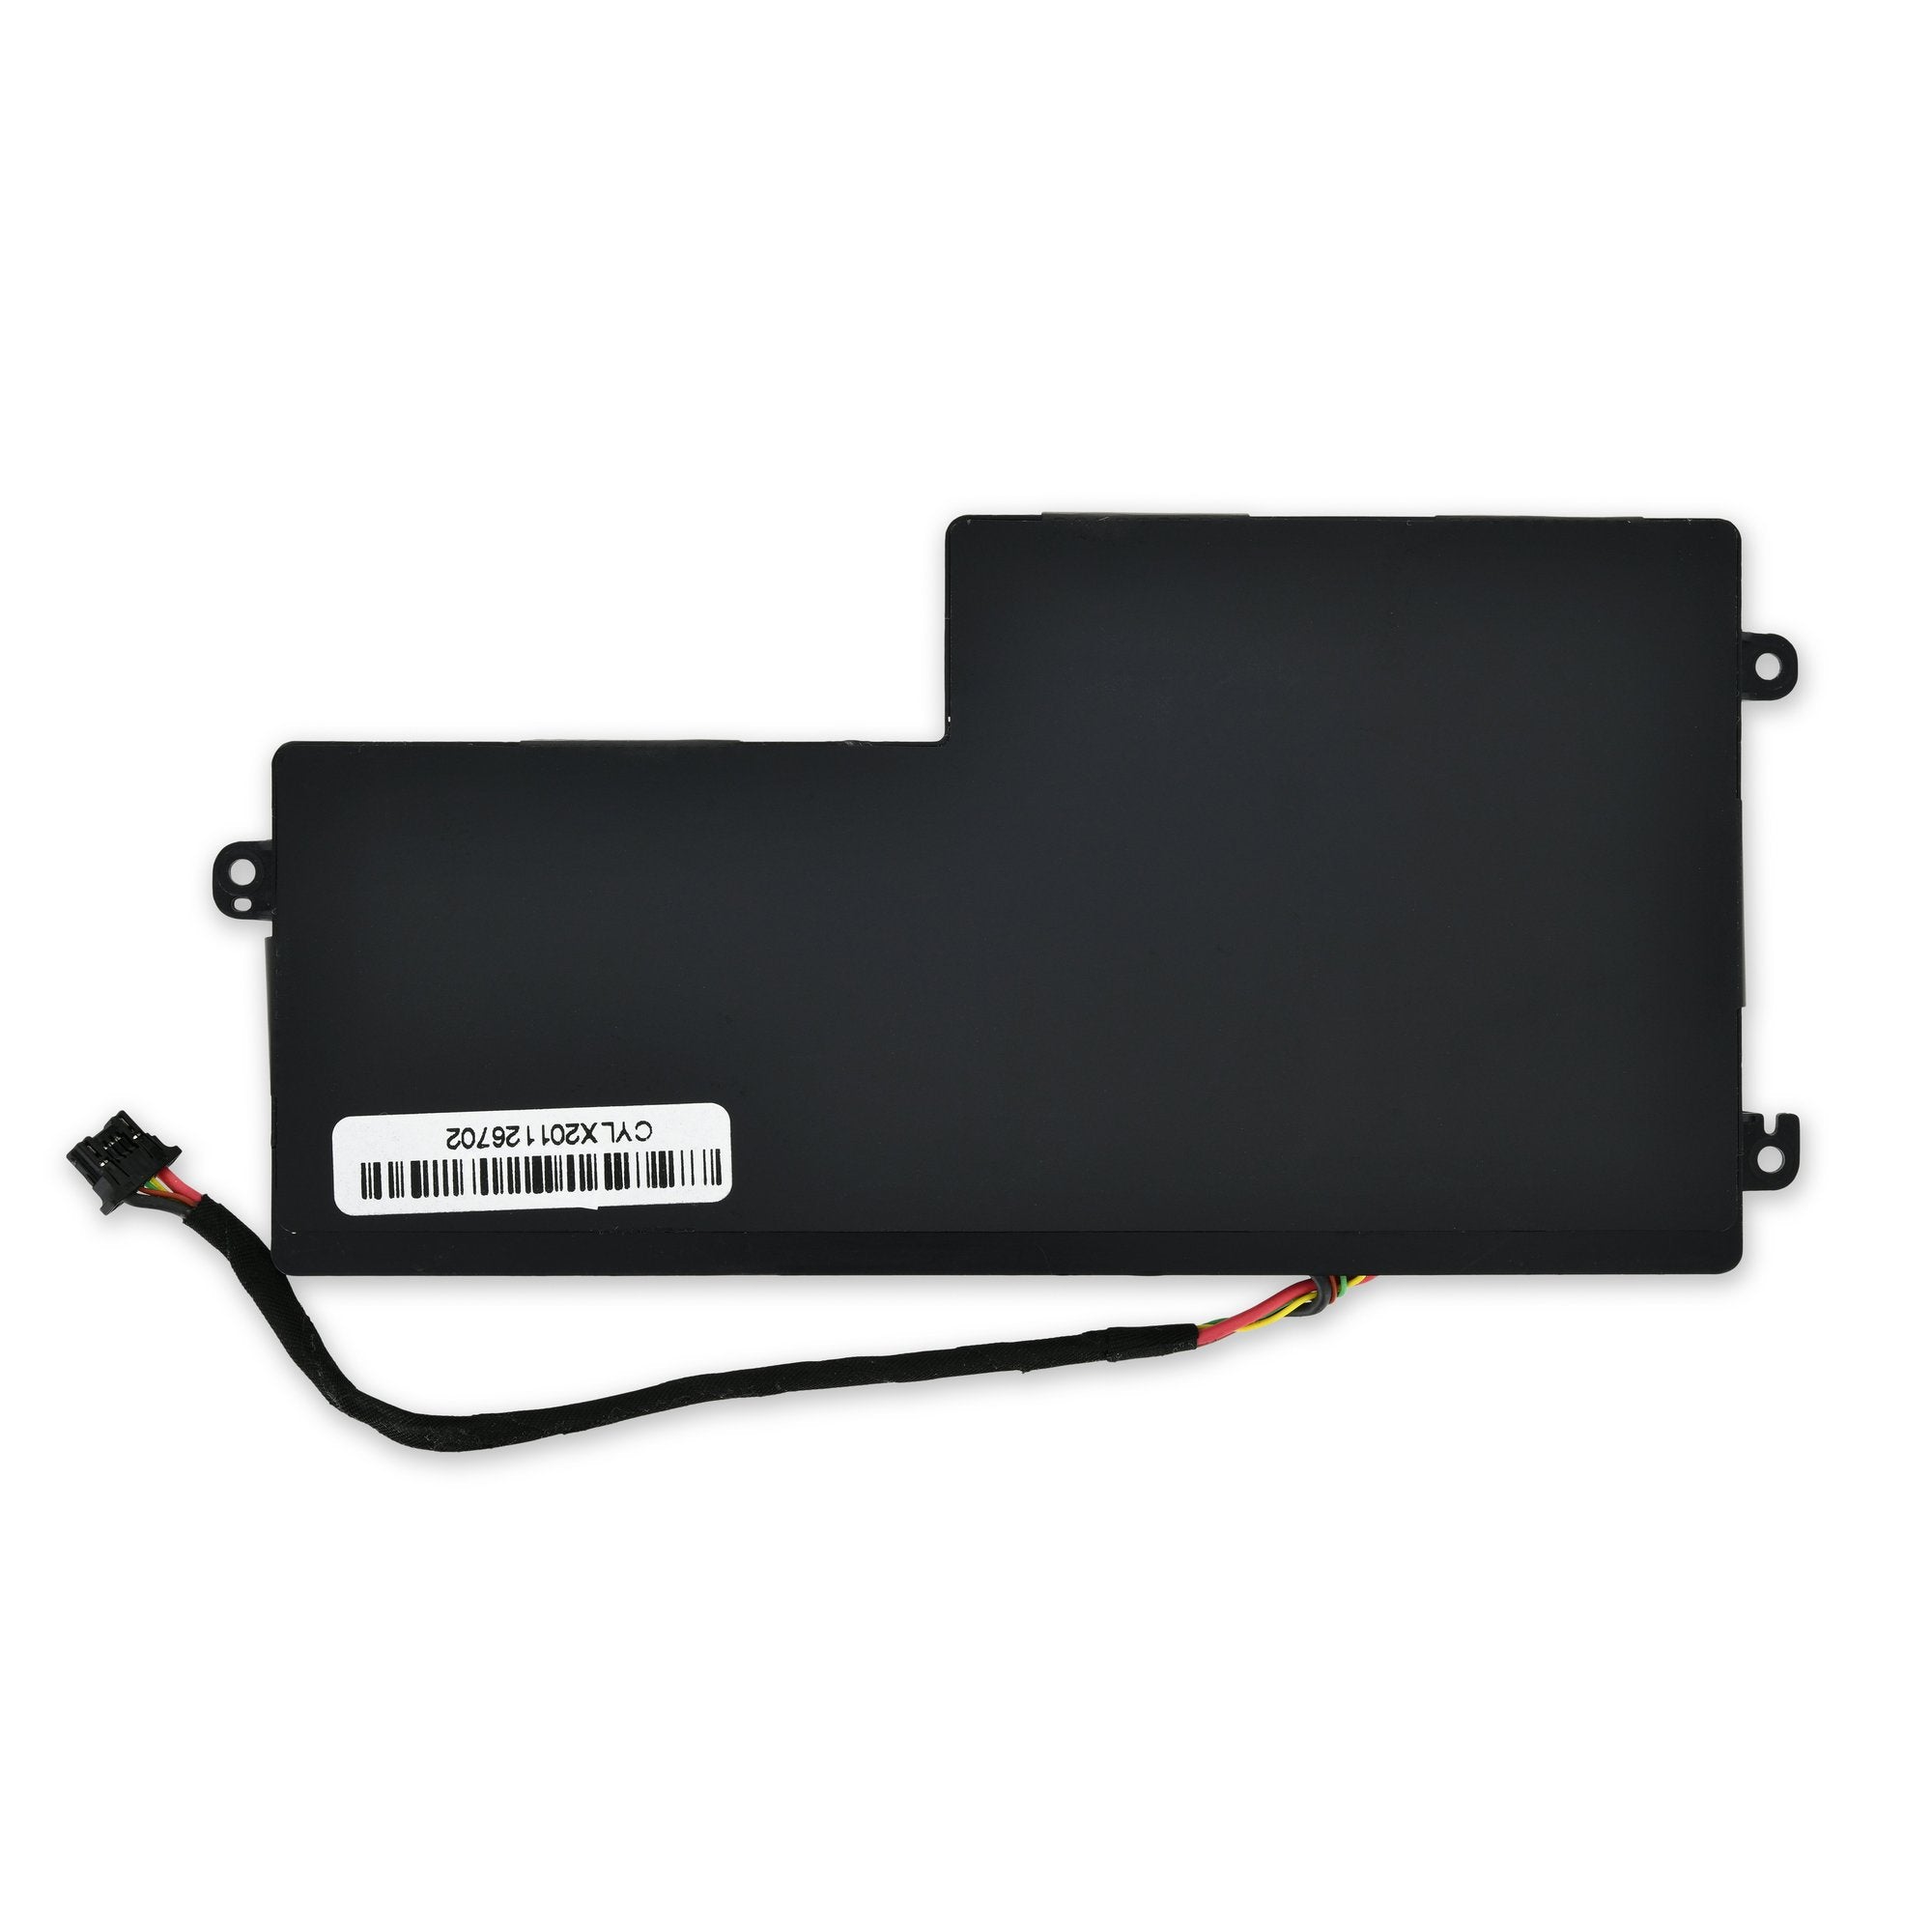 Lenovo ThinkPad Internal T440 / T450 / T460 / X240 / X250 / X270 Battery New Part Only